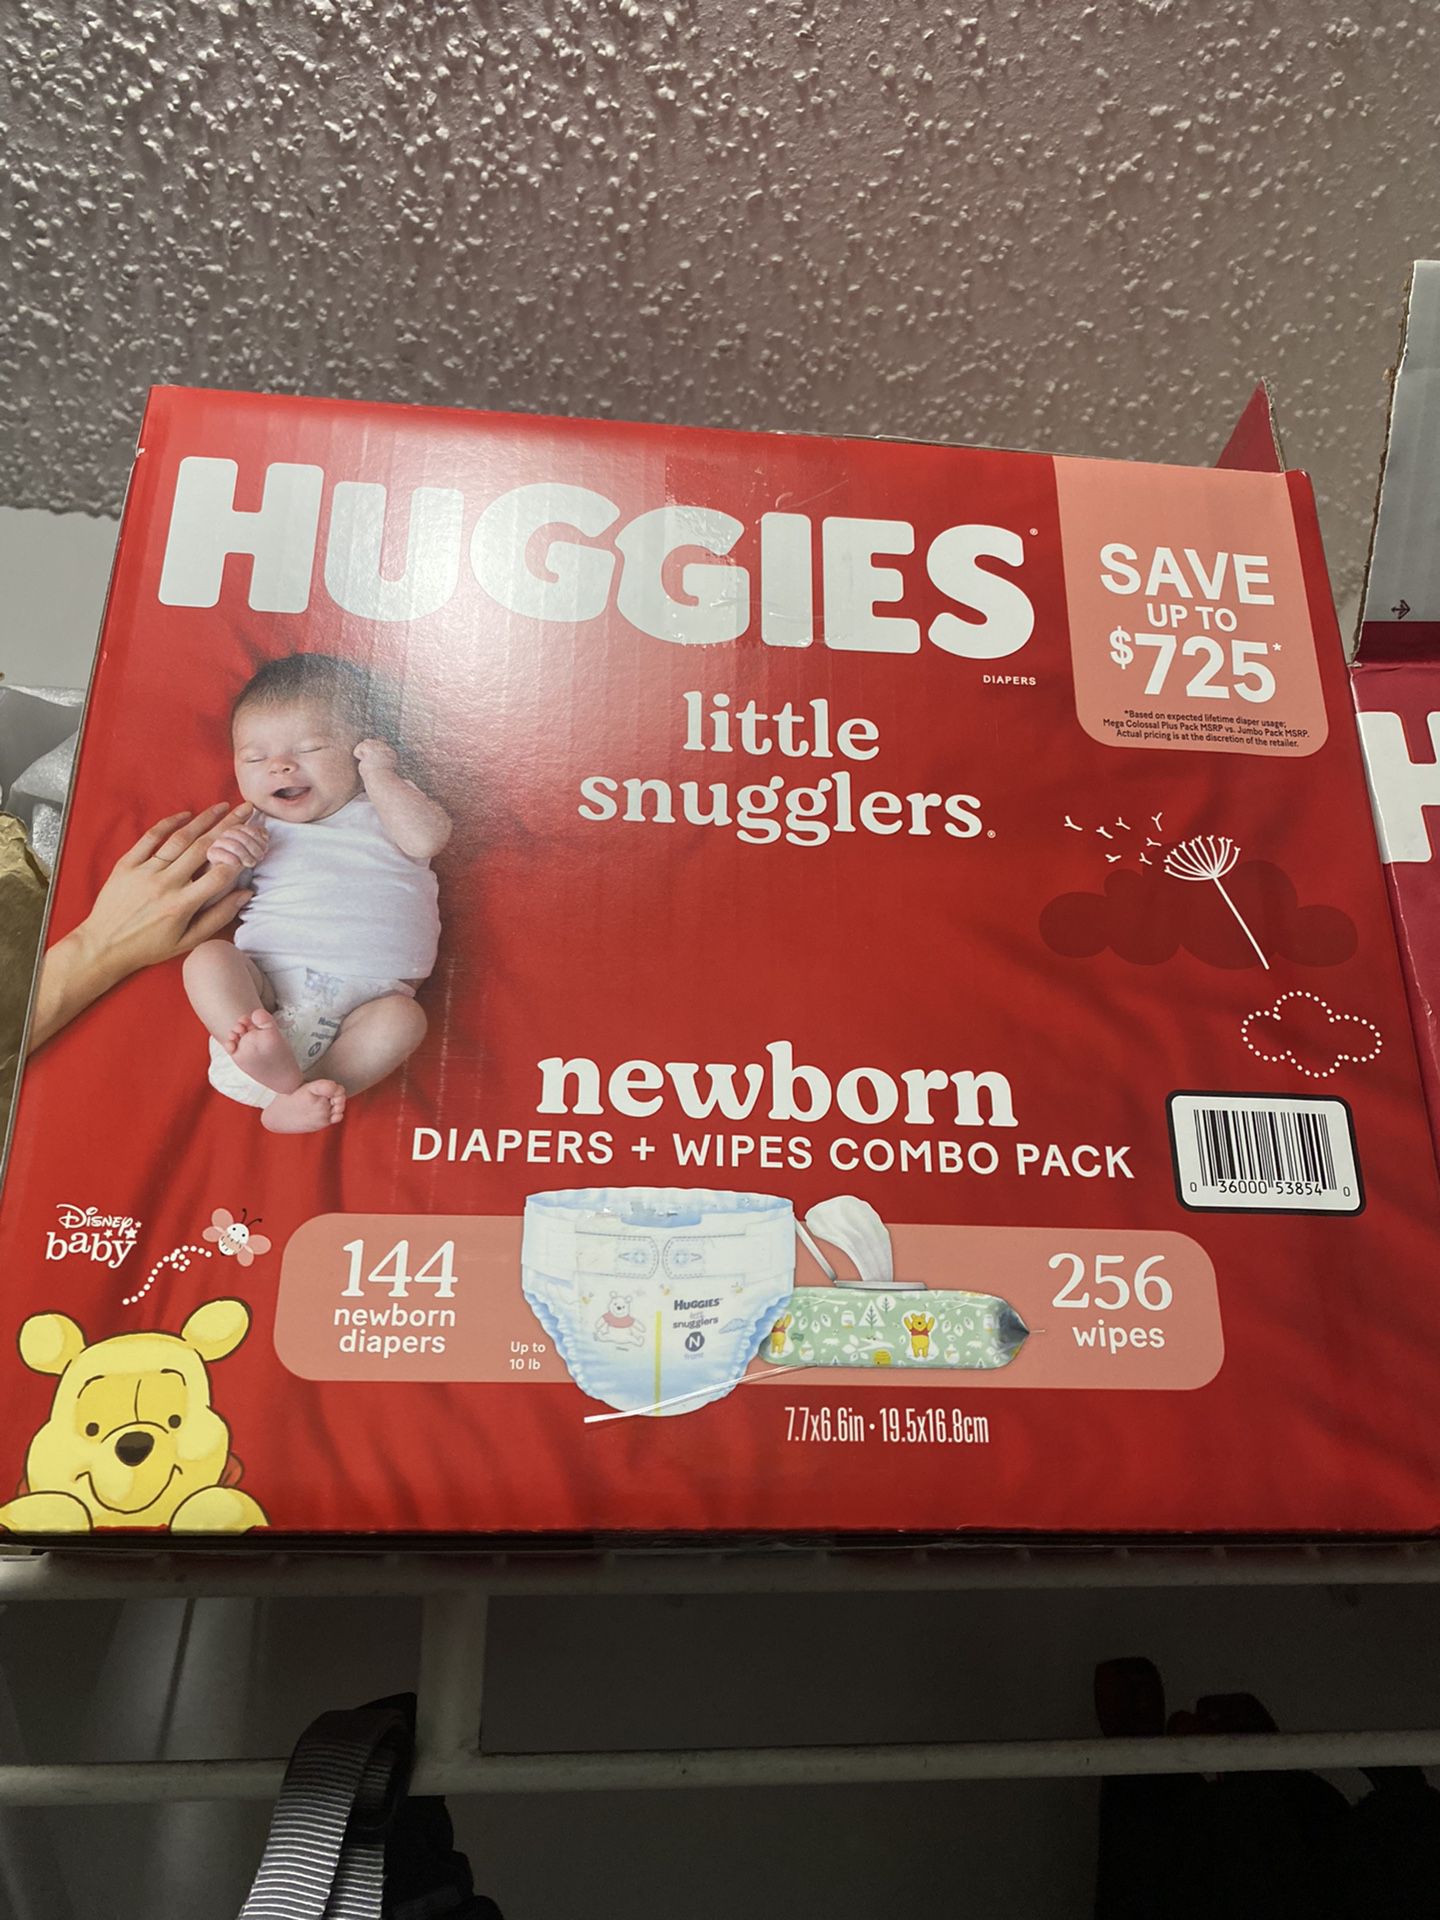 Huggies Little Snugglers Newborn Diapers + Wipes